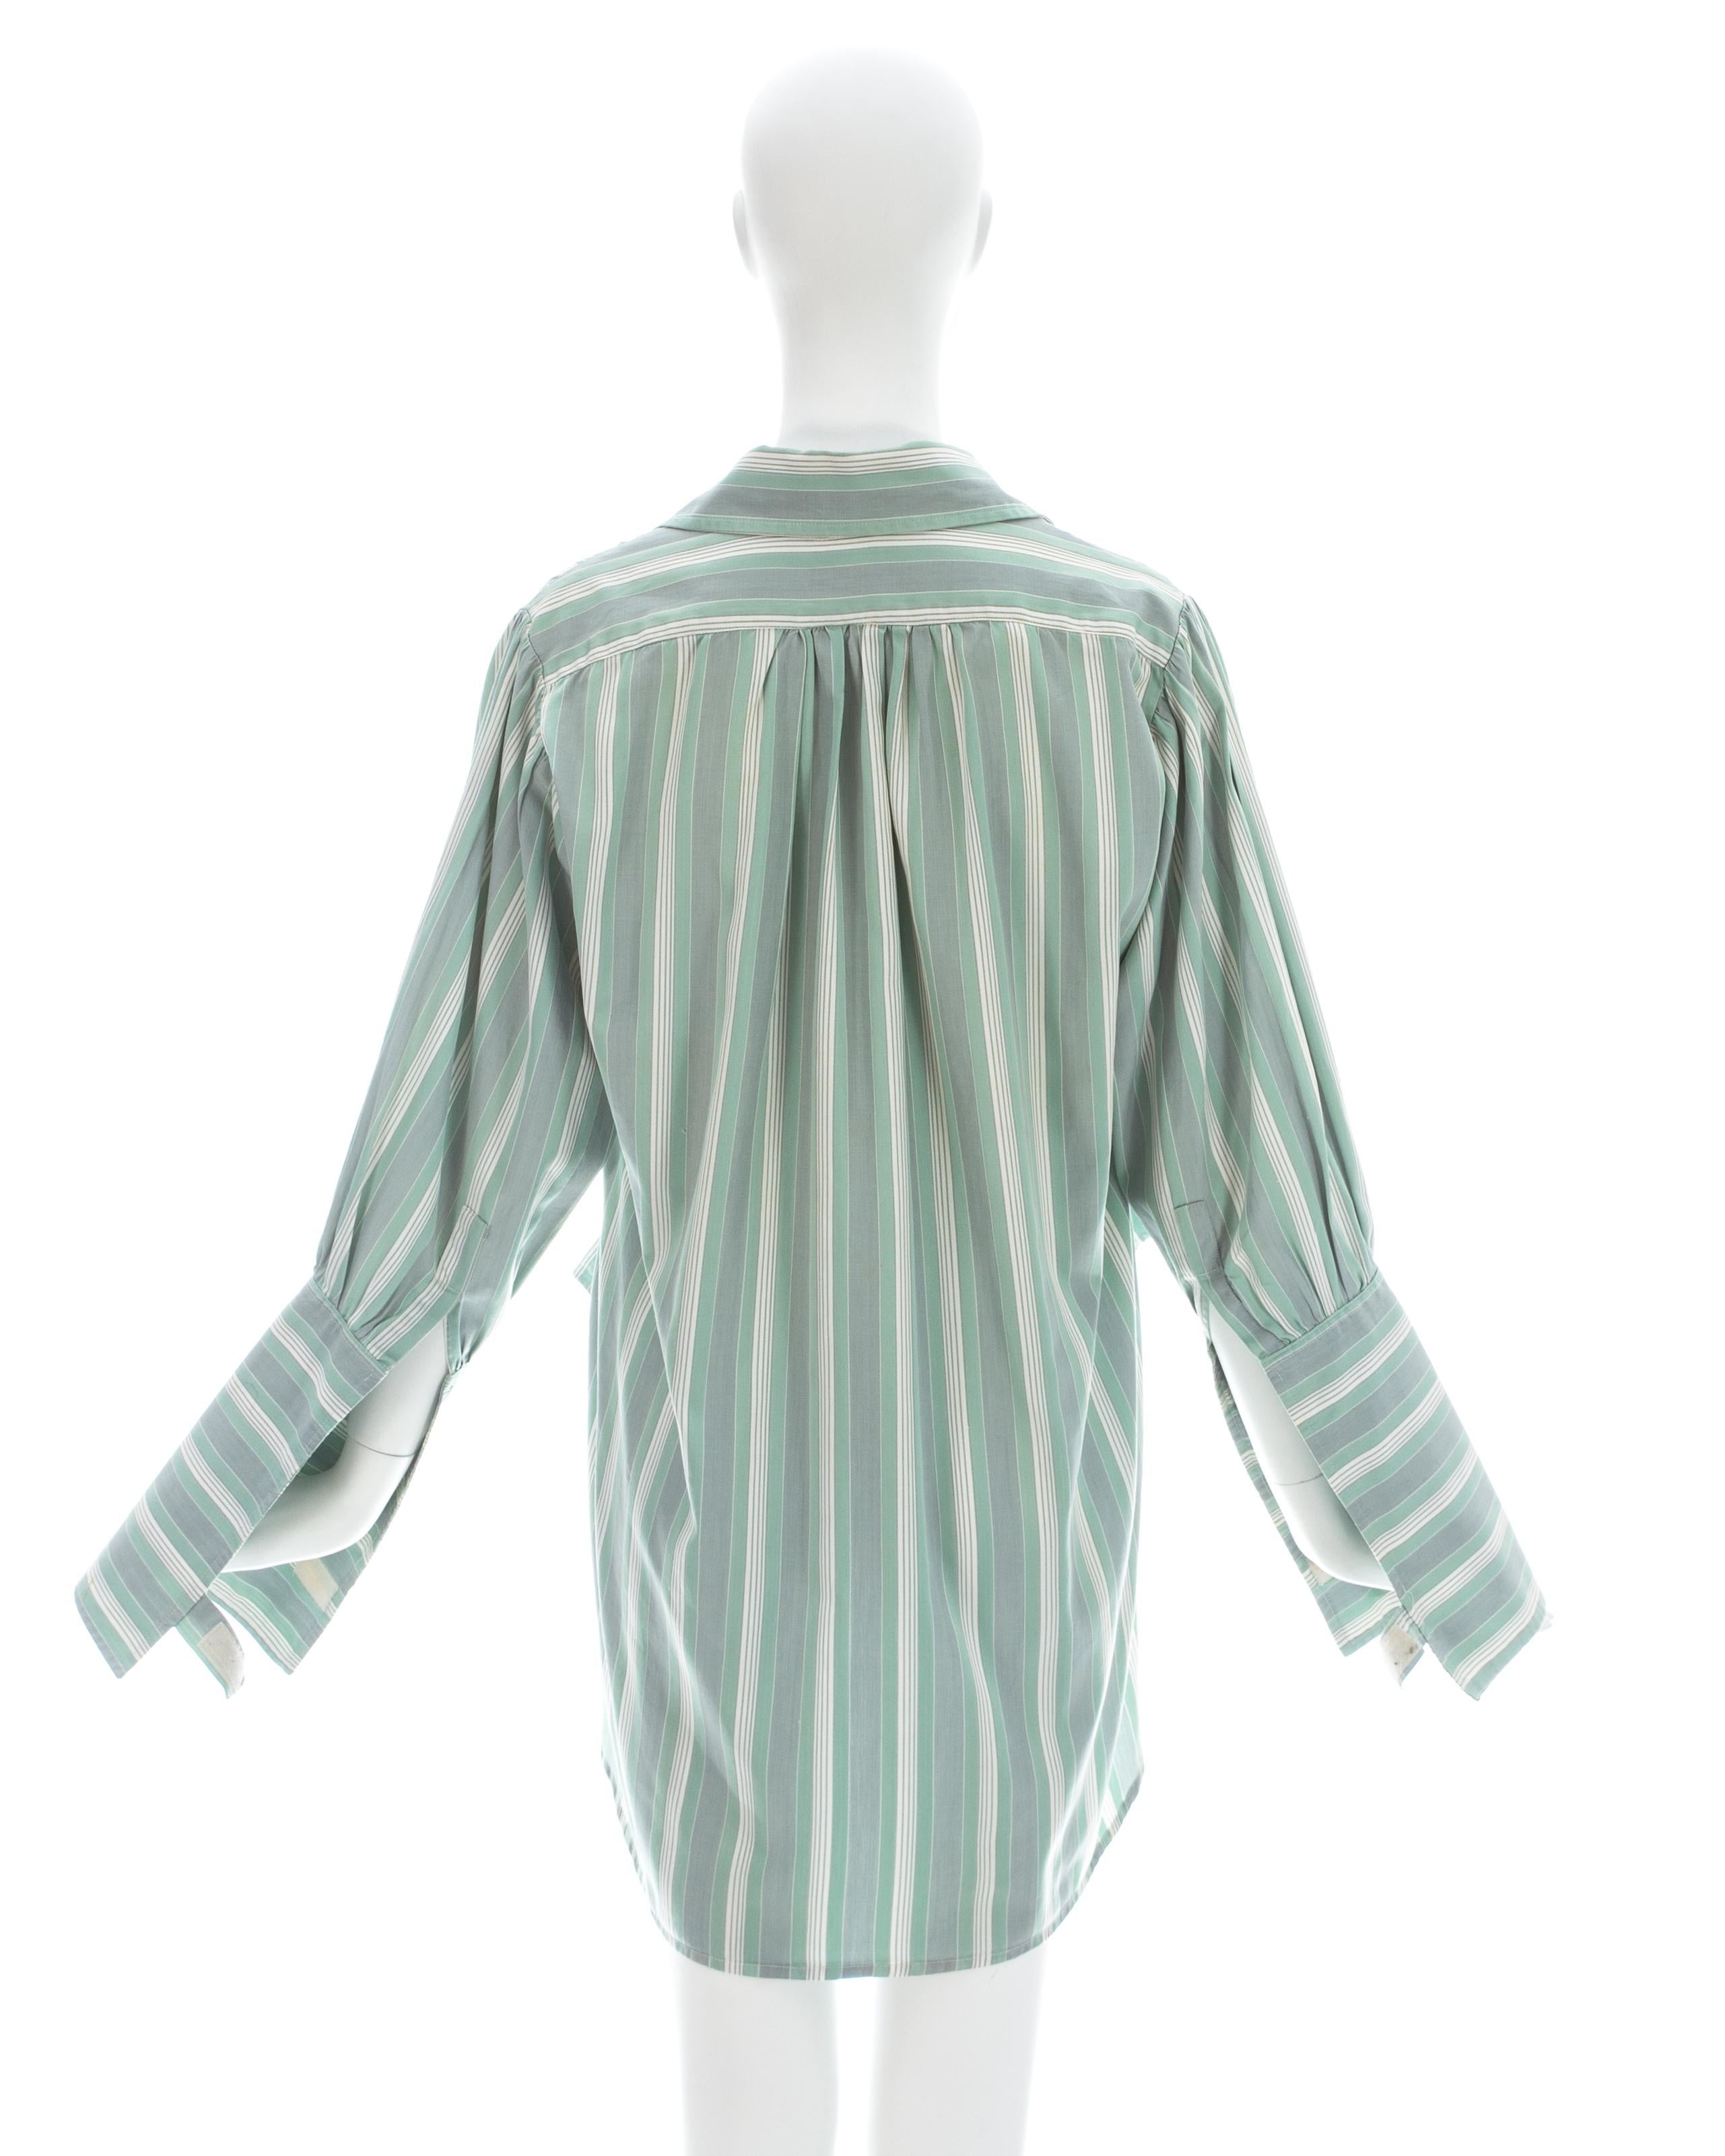 Women's or Men's Vivienne Westwood / Malcolm McLaren striped cotton oversized shirt, ss 1983 For Sale